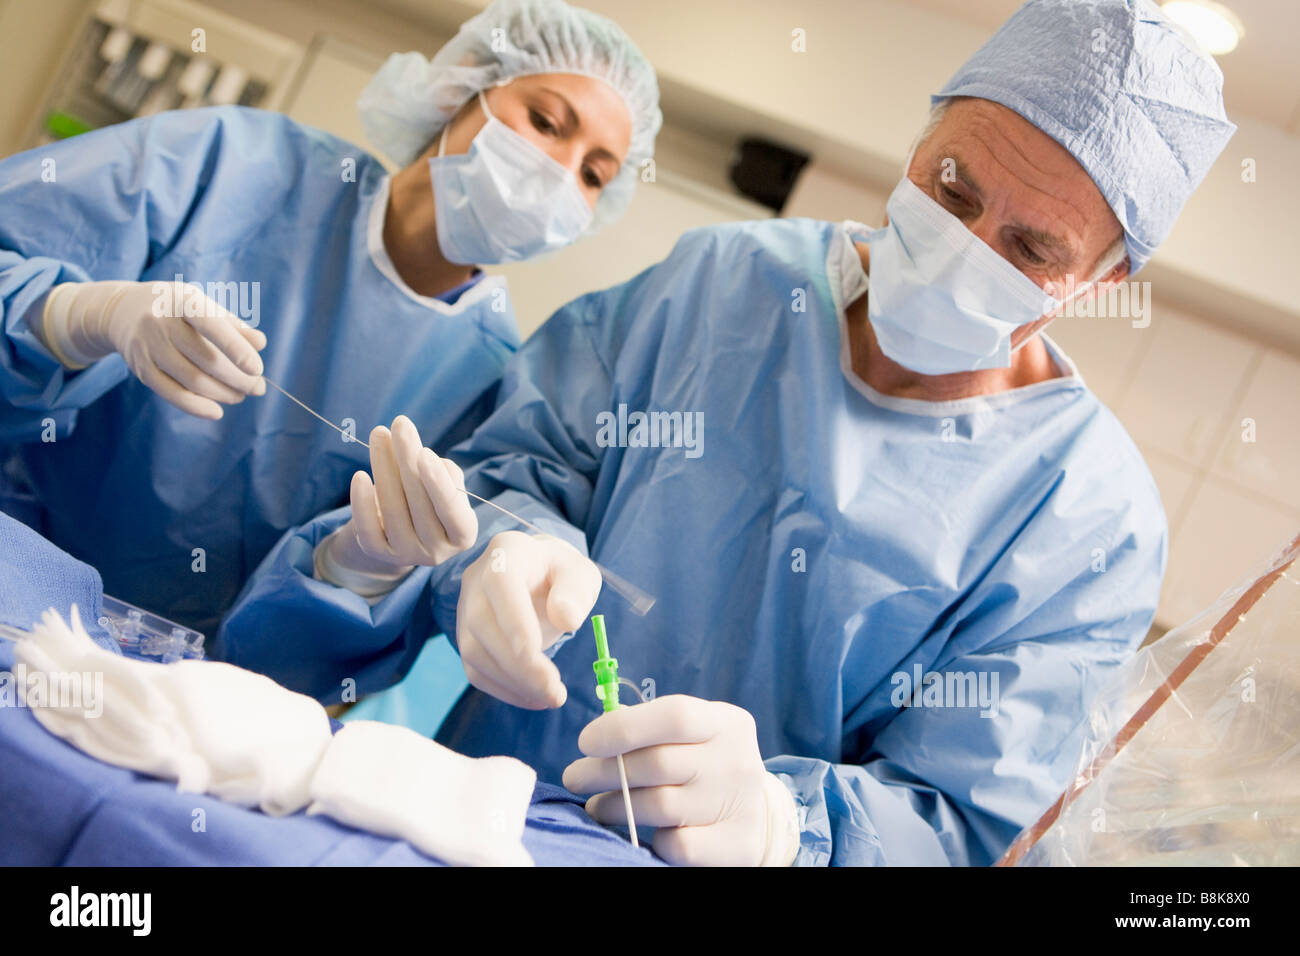 Surgeons Preparing Equipment For Surgery Stock Photo